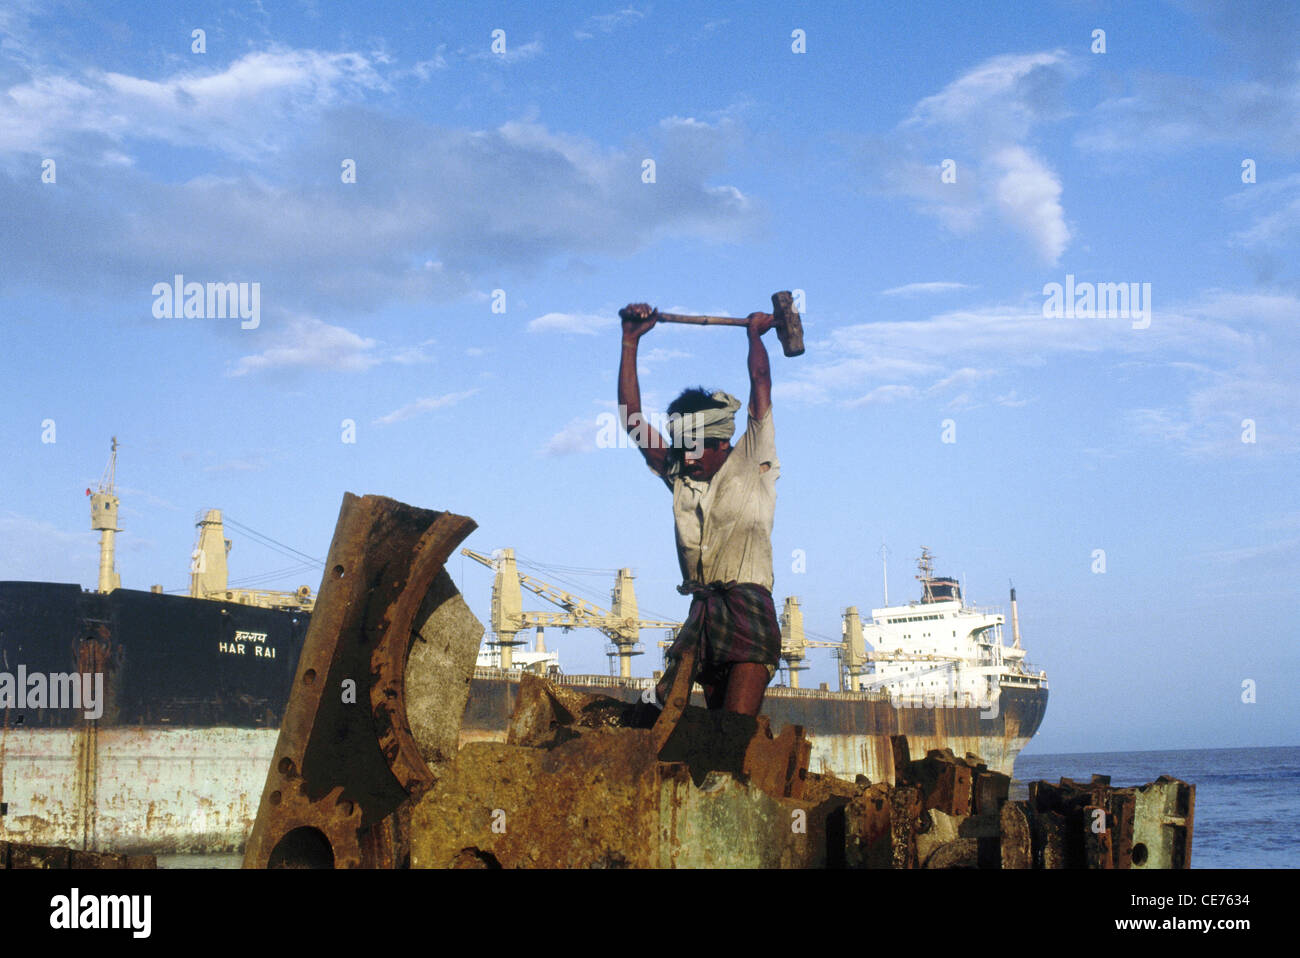 RVA 83126 : uomo indiano nave rottura alang nave cantiere di rottura gujarat india Foto Stock